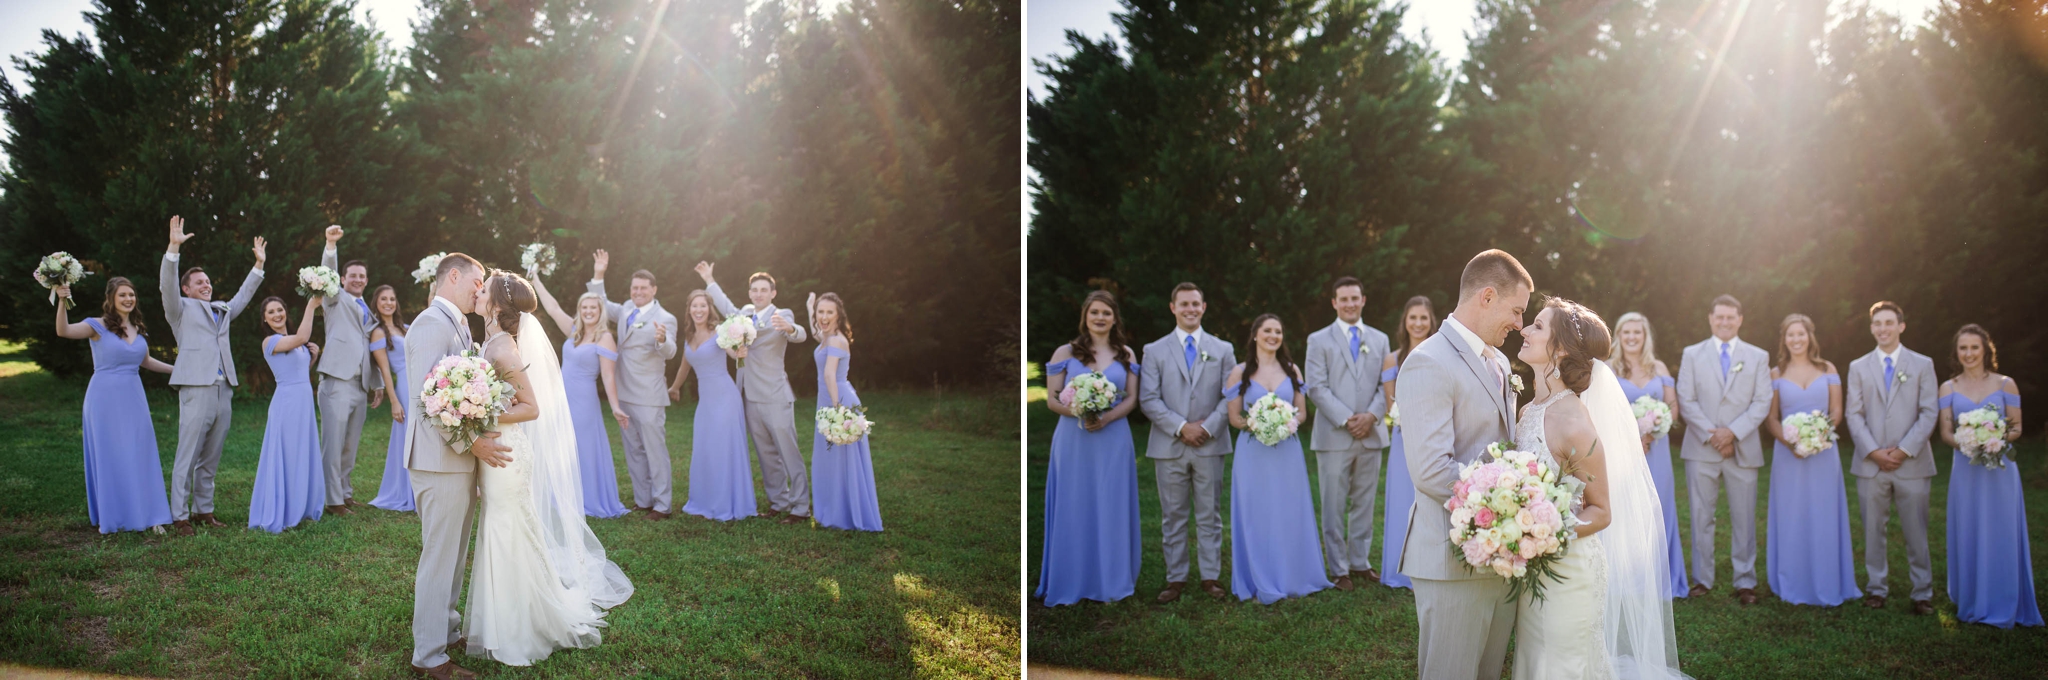 Paige + Tyler - Wedding at Rand Bryan House in Garner, NC - Raleigh North Carolina Photographer